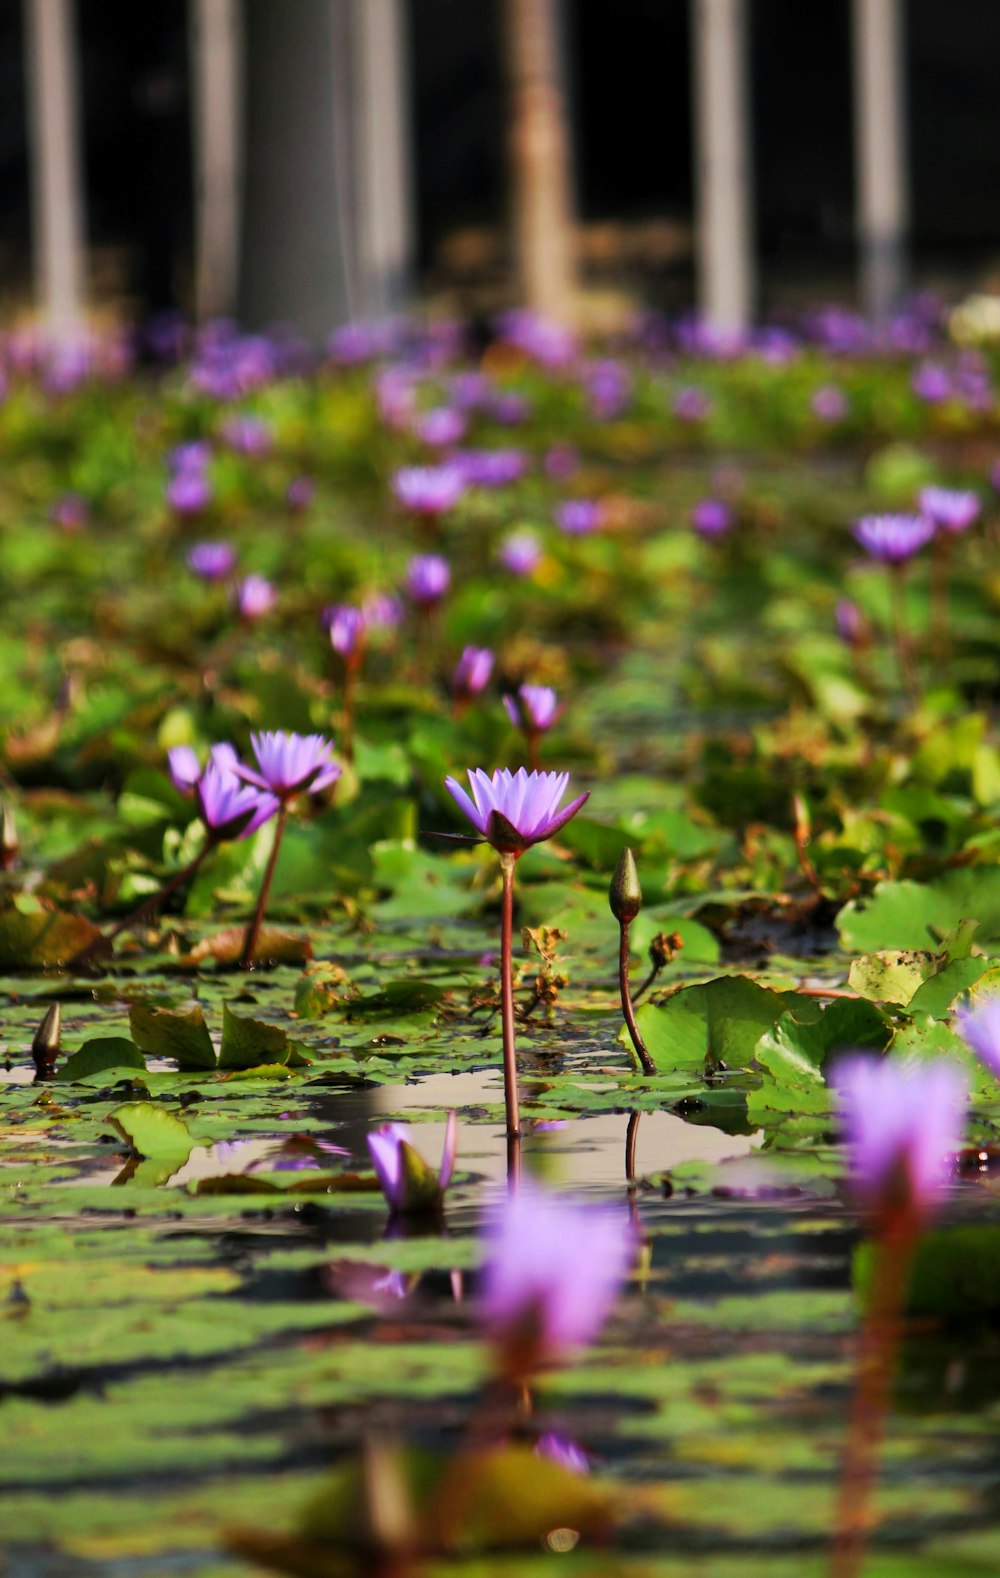 Un étang rempli de nénuphars violets